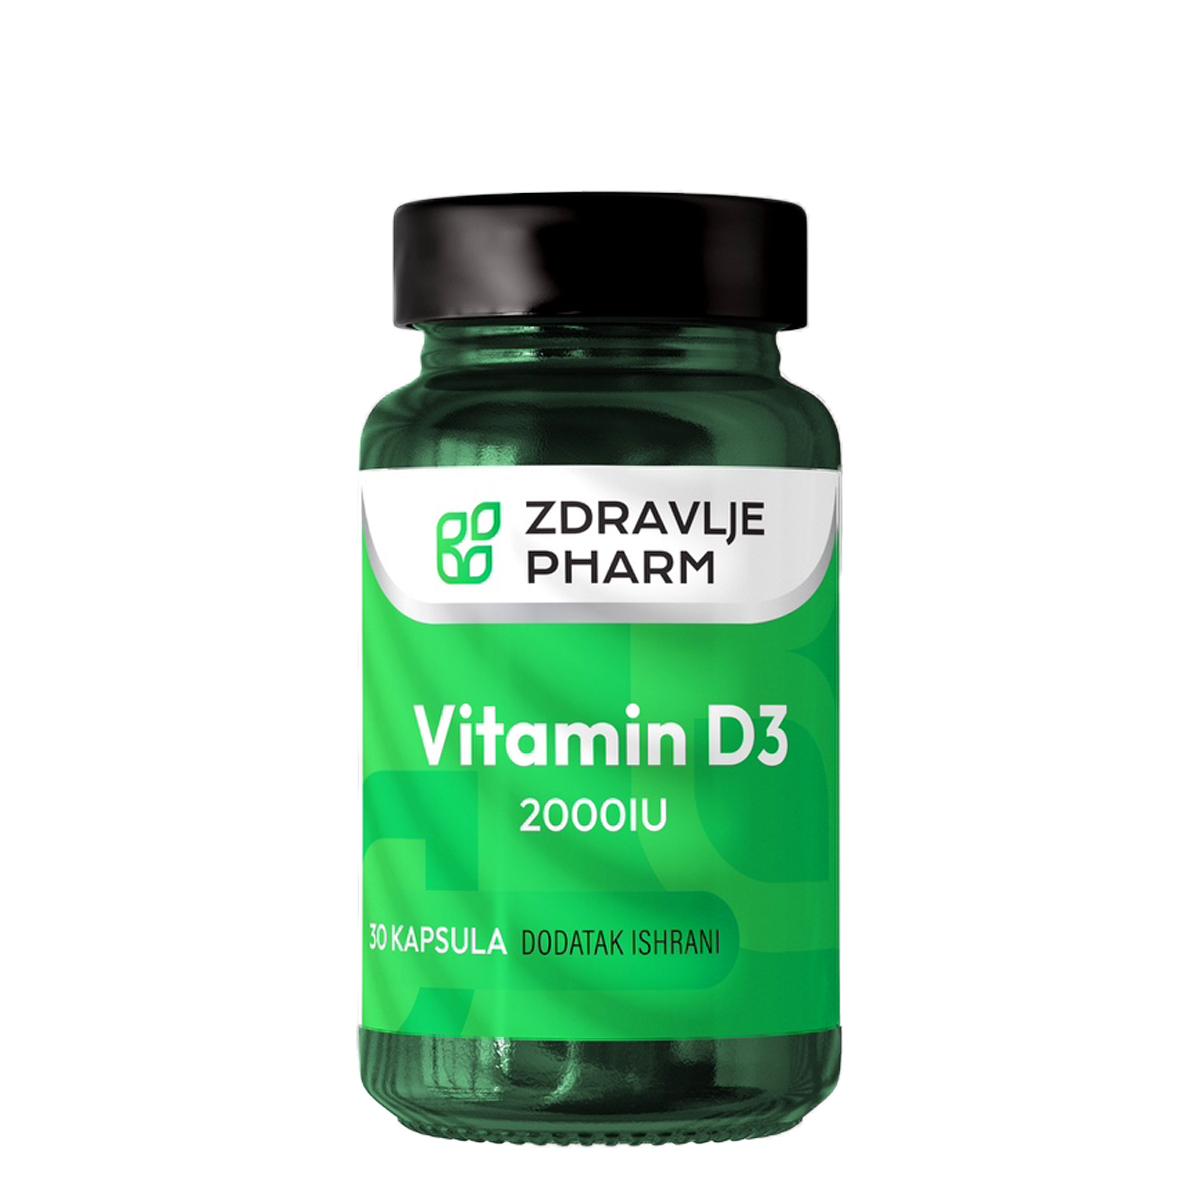 ZDRAVLJE PHARM Vitamin D3 2000IU 30 kapsula